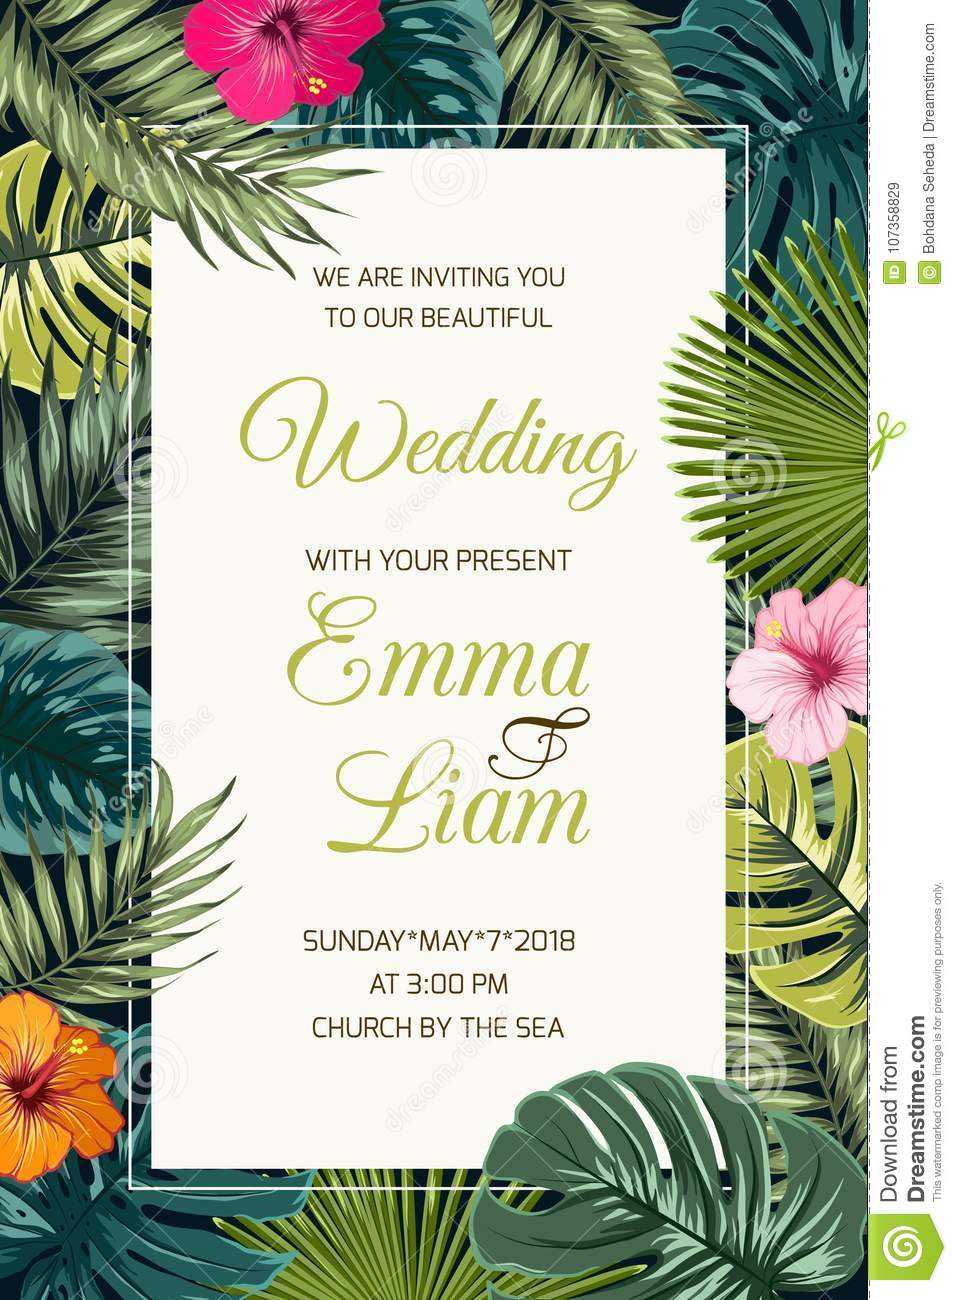 Wedding Event Invitation Card Template. Stock Vector Throughout Event Invitation Card Template